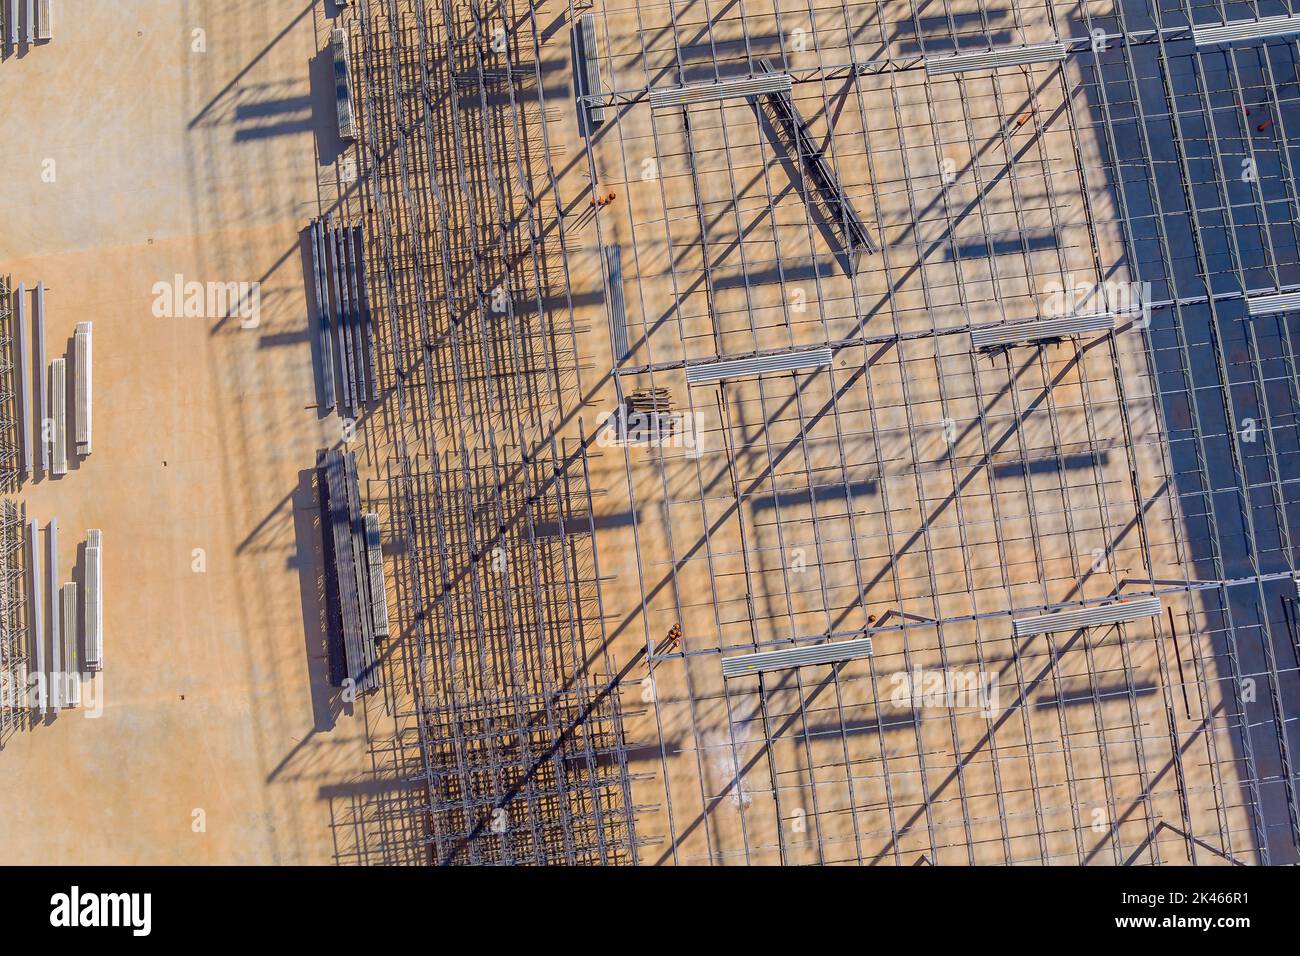 La construction de treillis de toit dans un entrepôt en acier comprend l'installation de barres de toit Banque D'Images